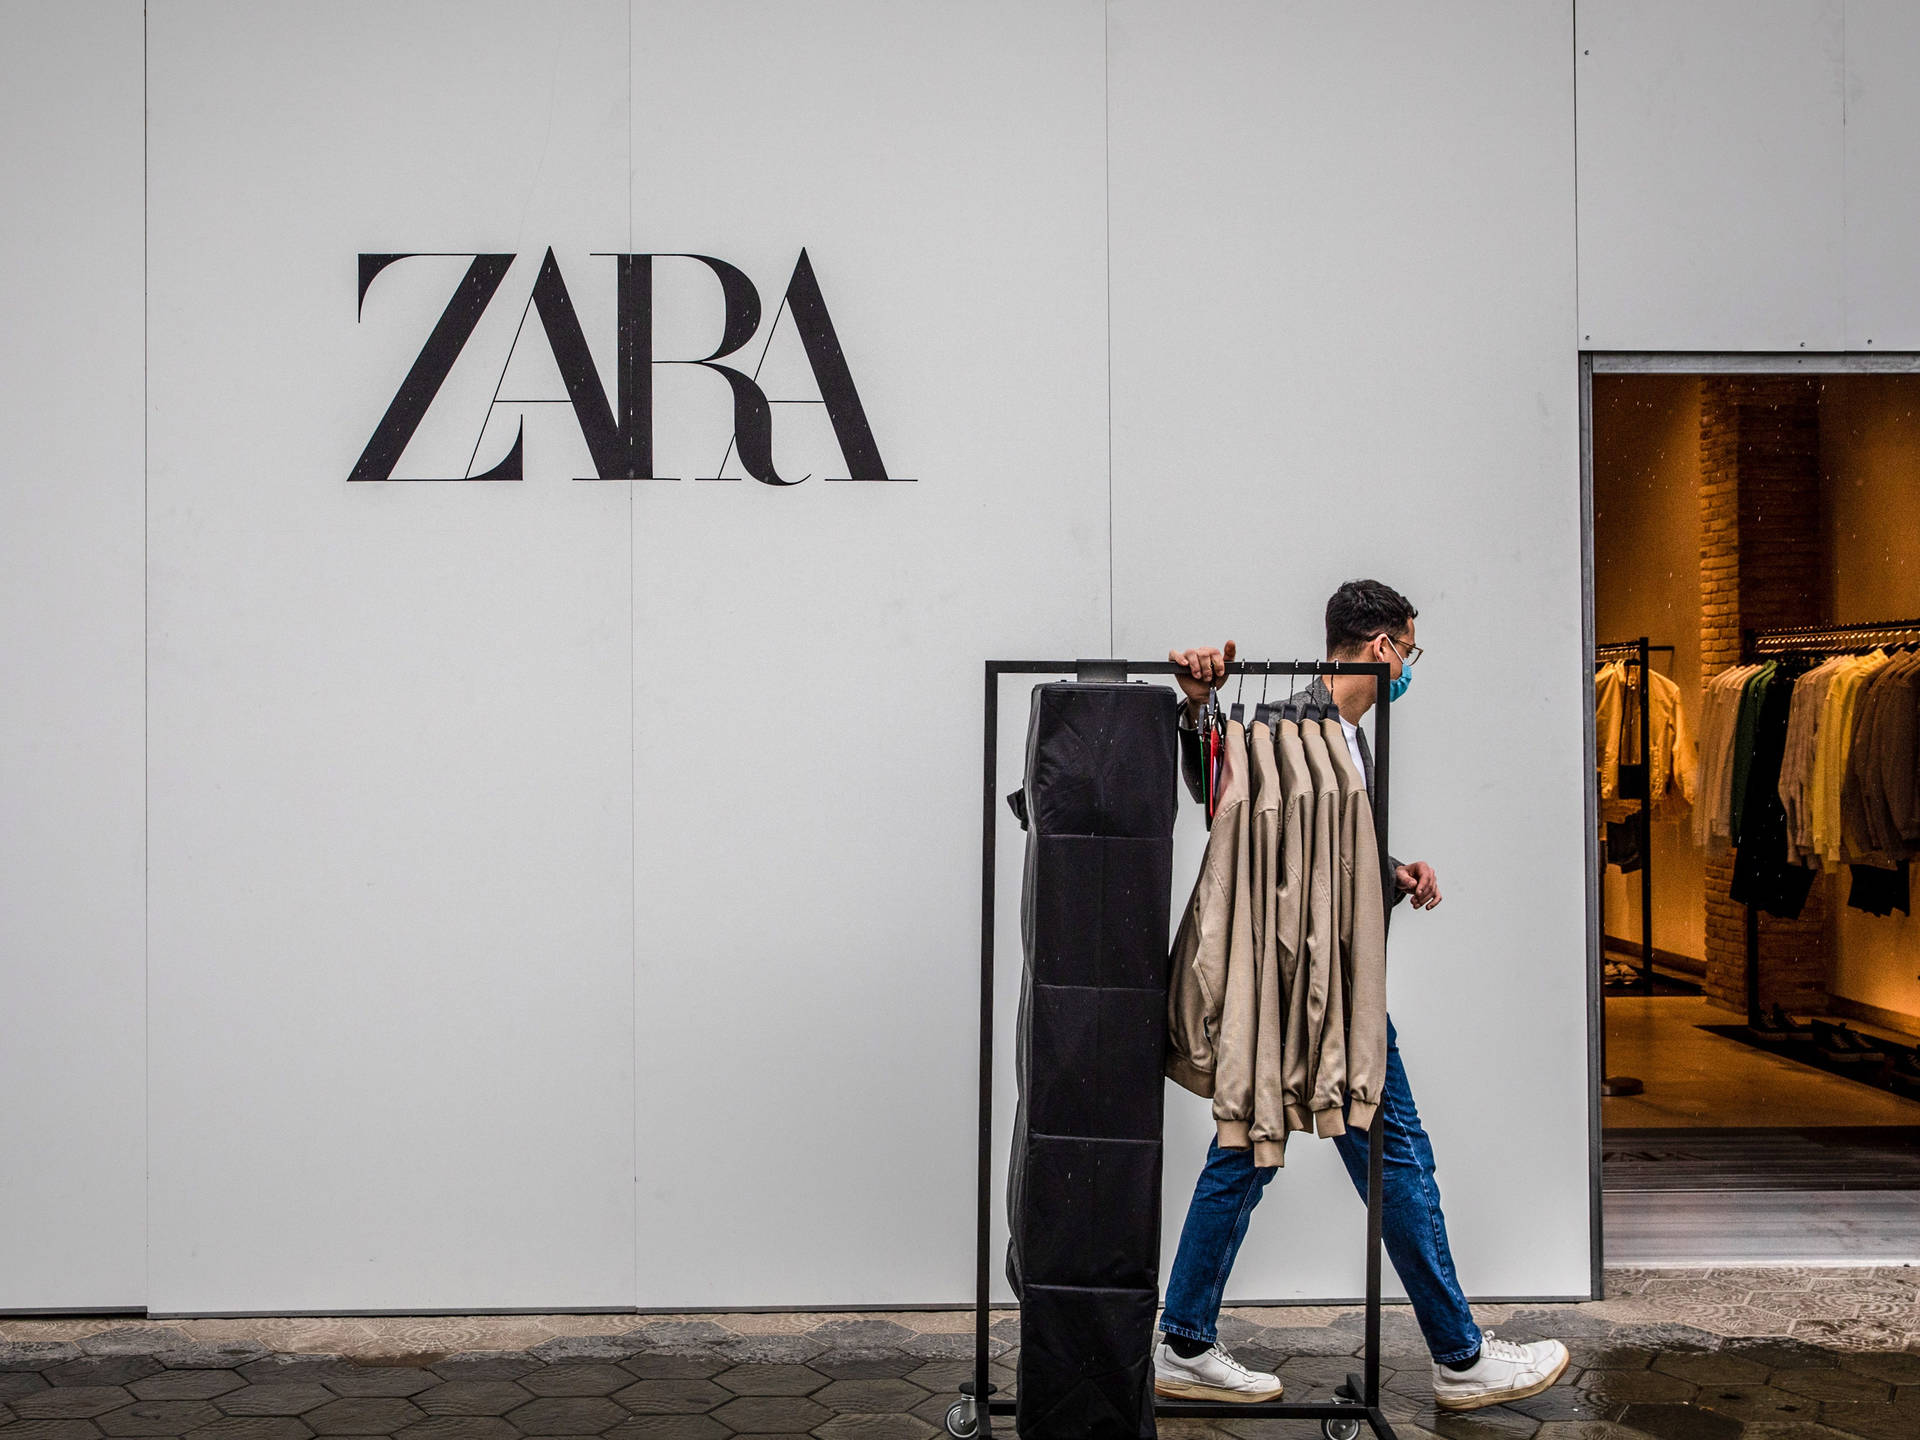 Zara Fashion Chain Store Background